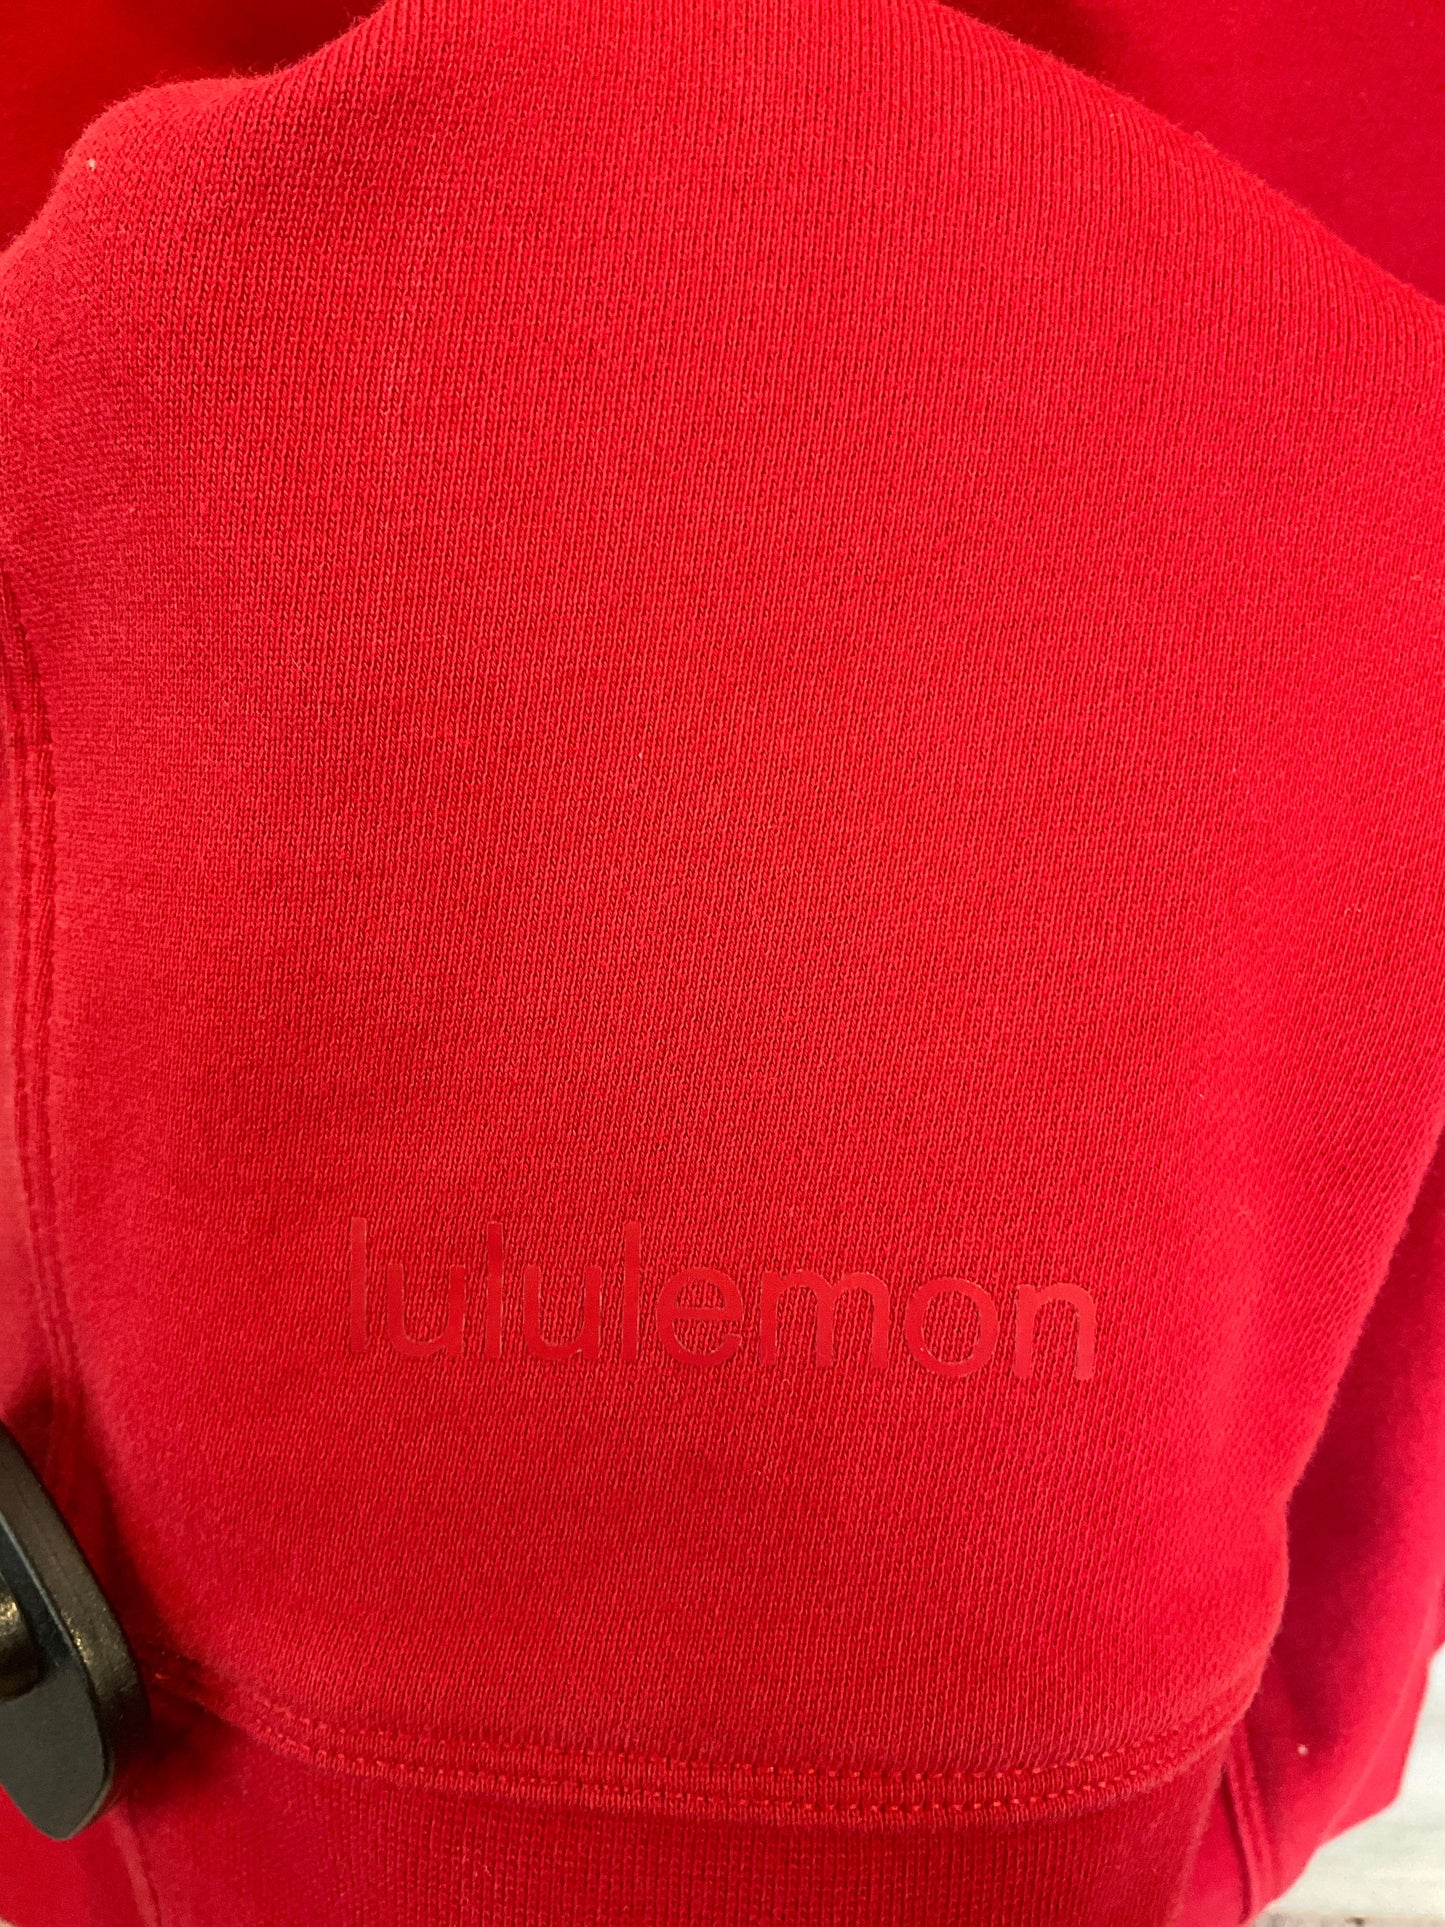 Red Sweatshirt Crewneck Lululemon, Size 6